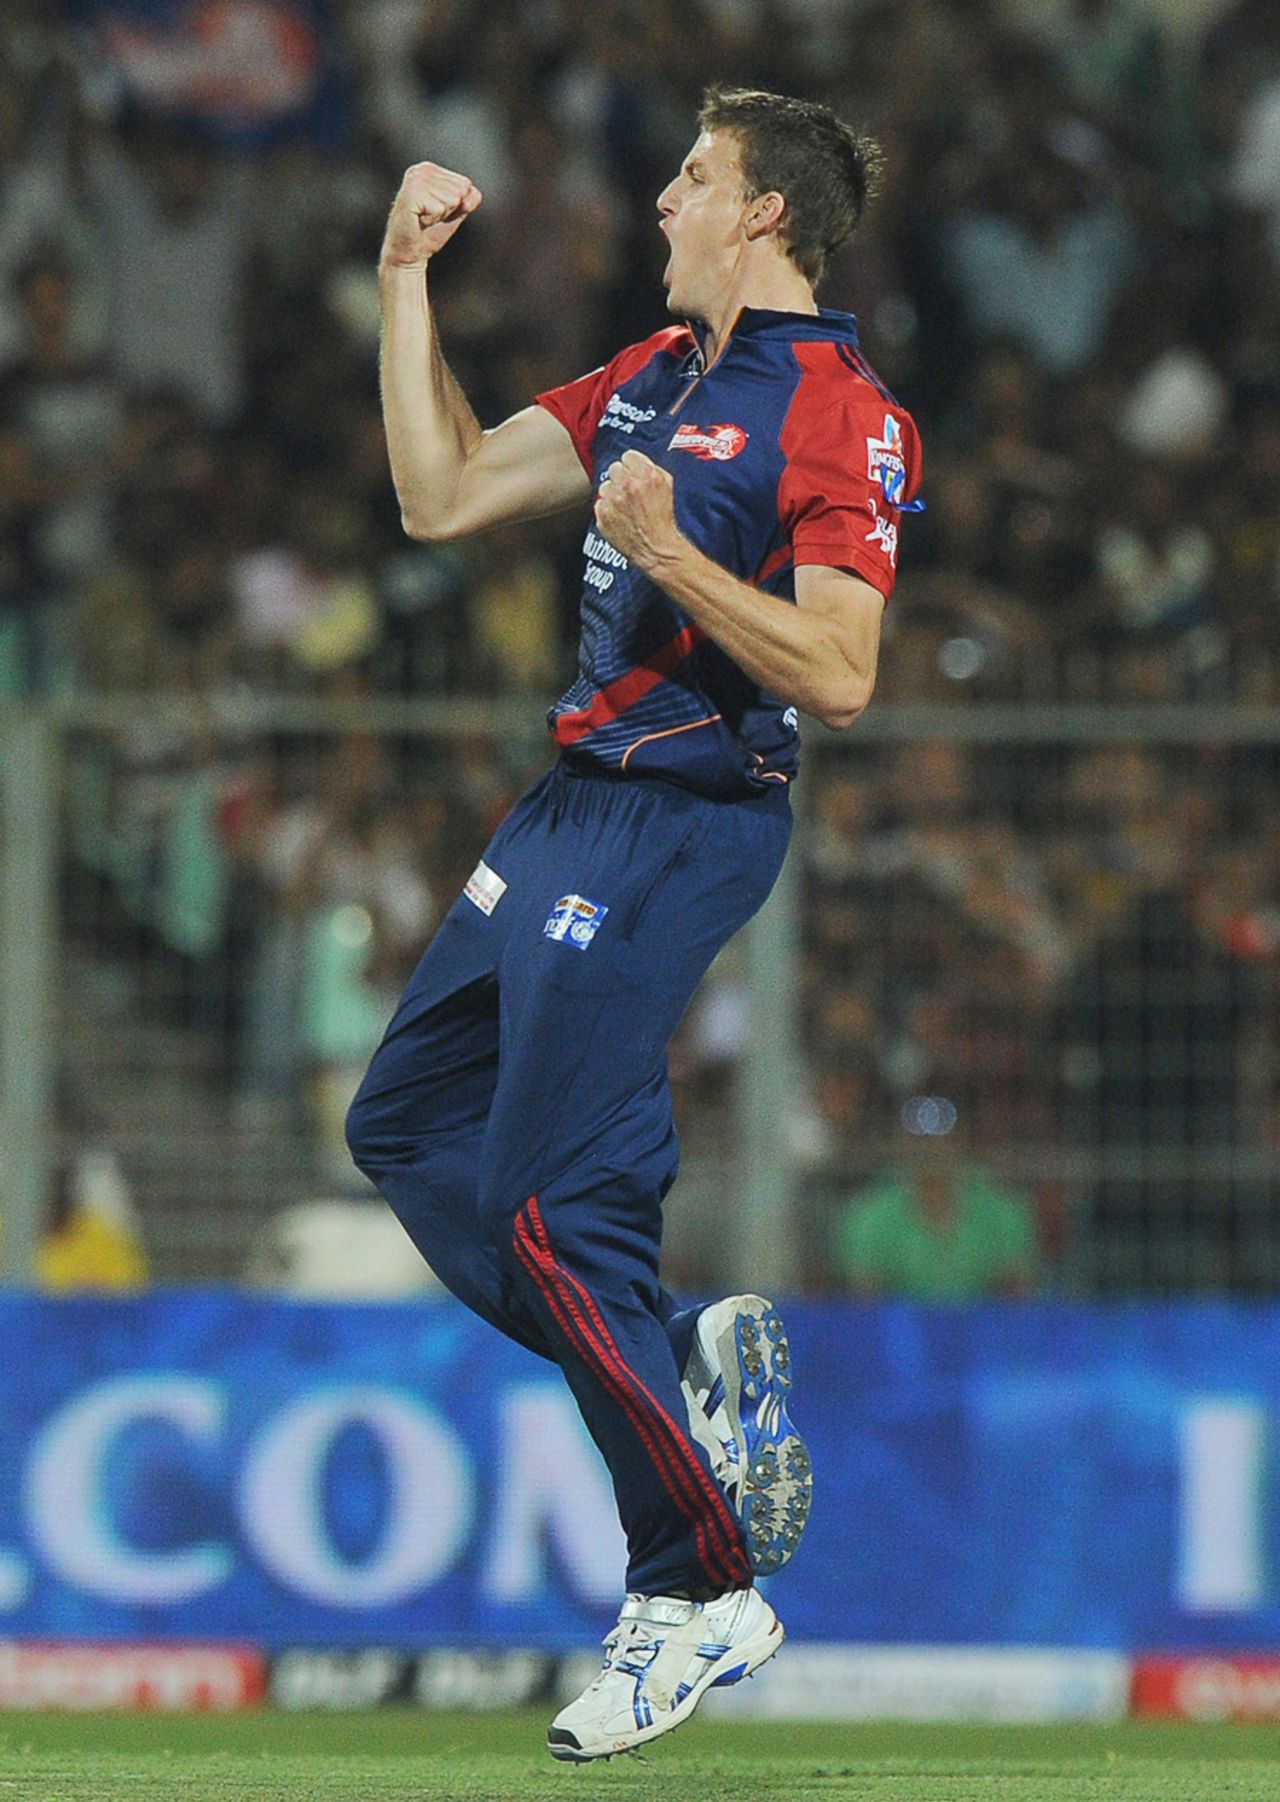 Morne Morkel picked up three wickets, Kolkata Knight Riders v Delhi Daredevils, IPL 2012, Kolkata, April 5, 2012